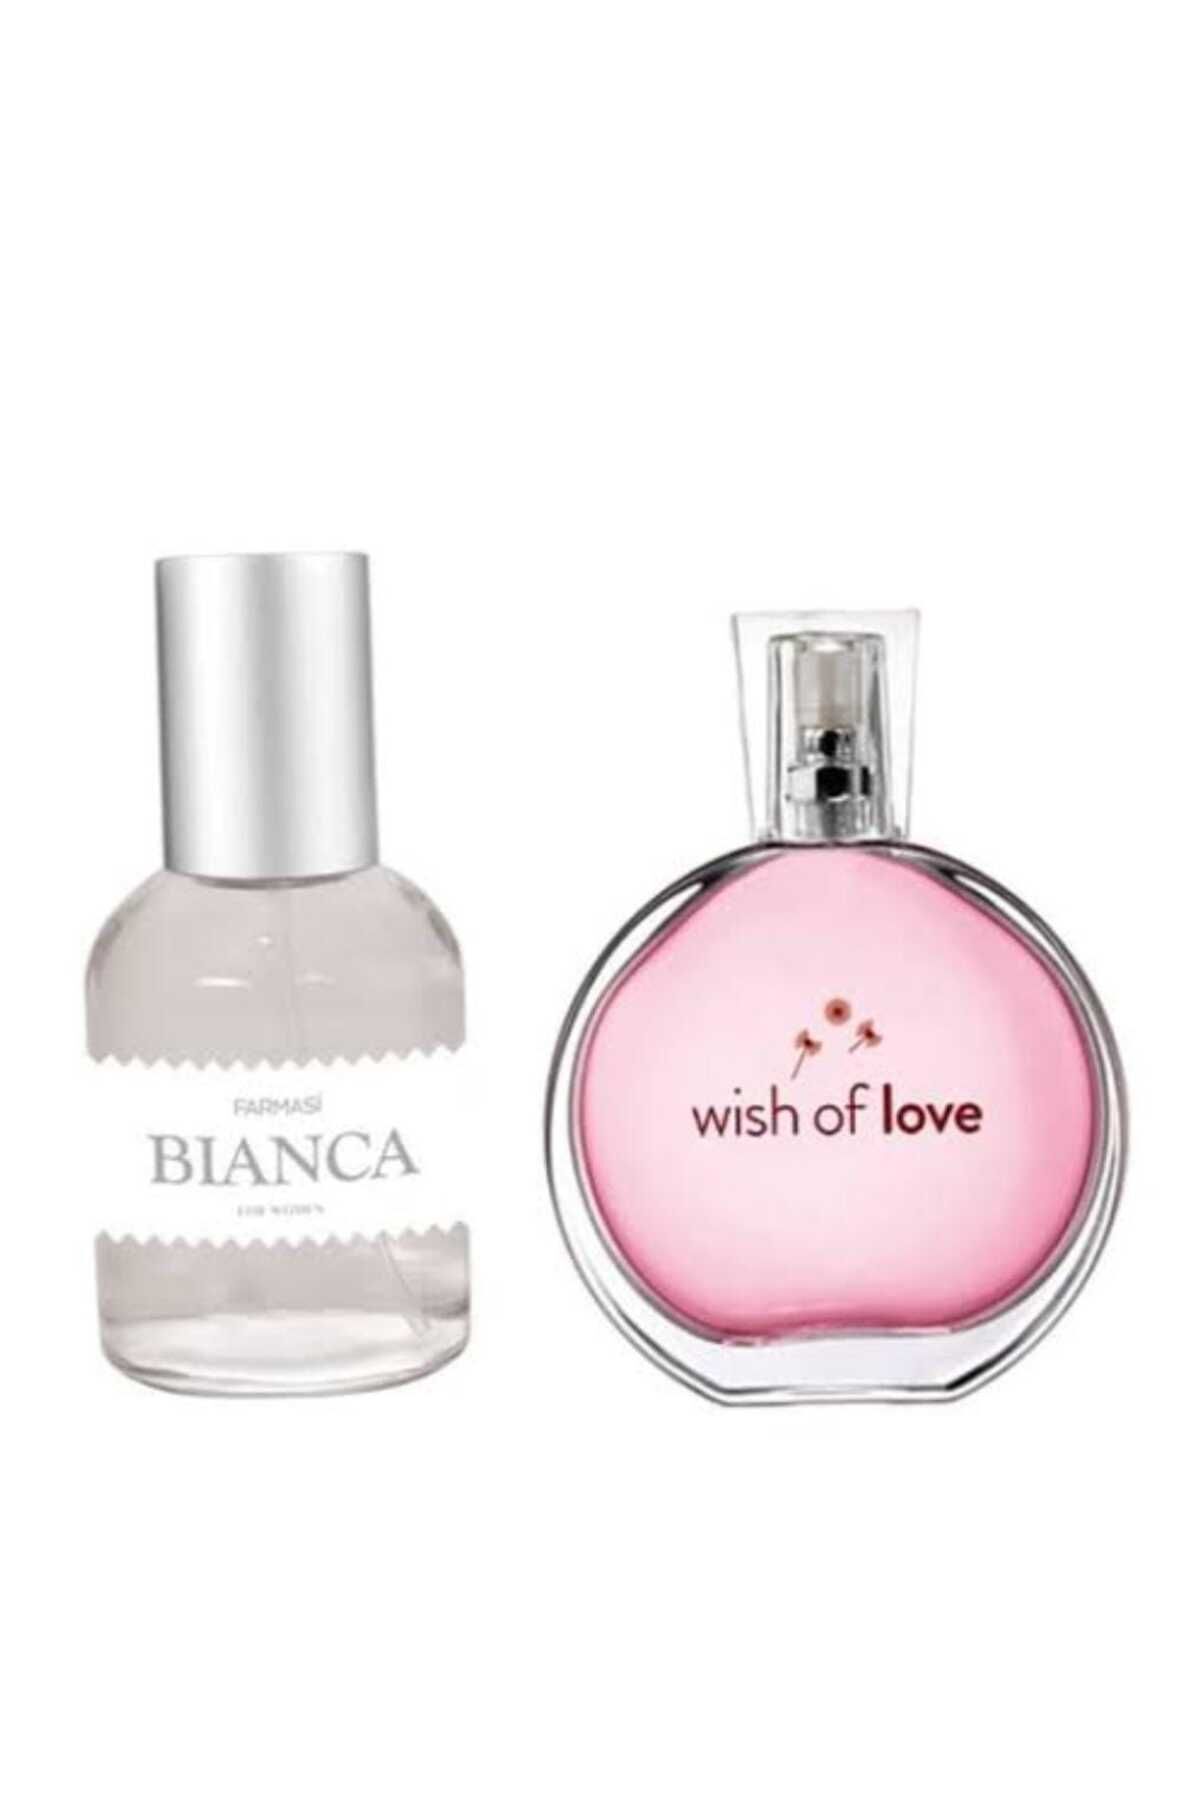 Farmasi bianca+wisf of love parfüm